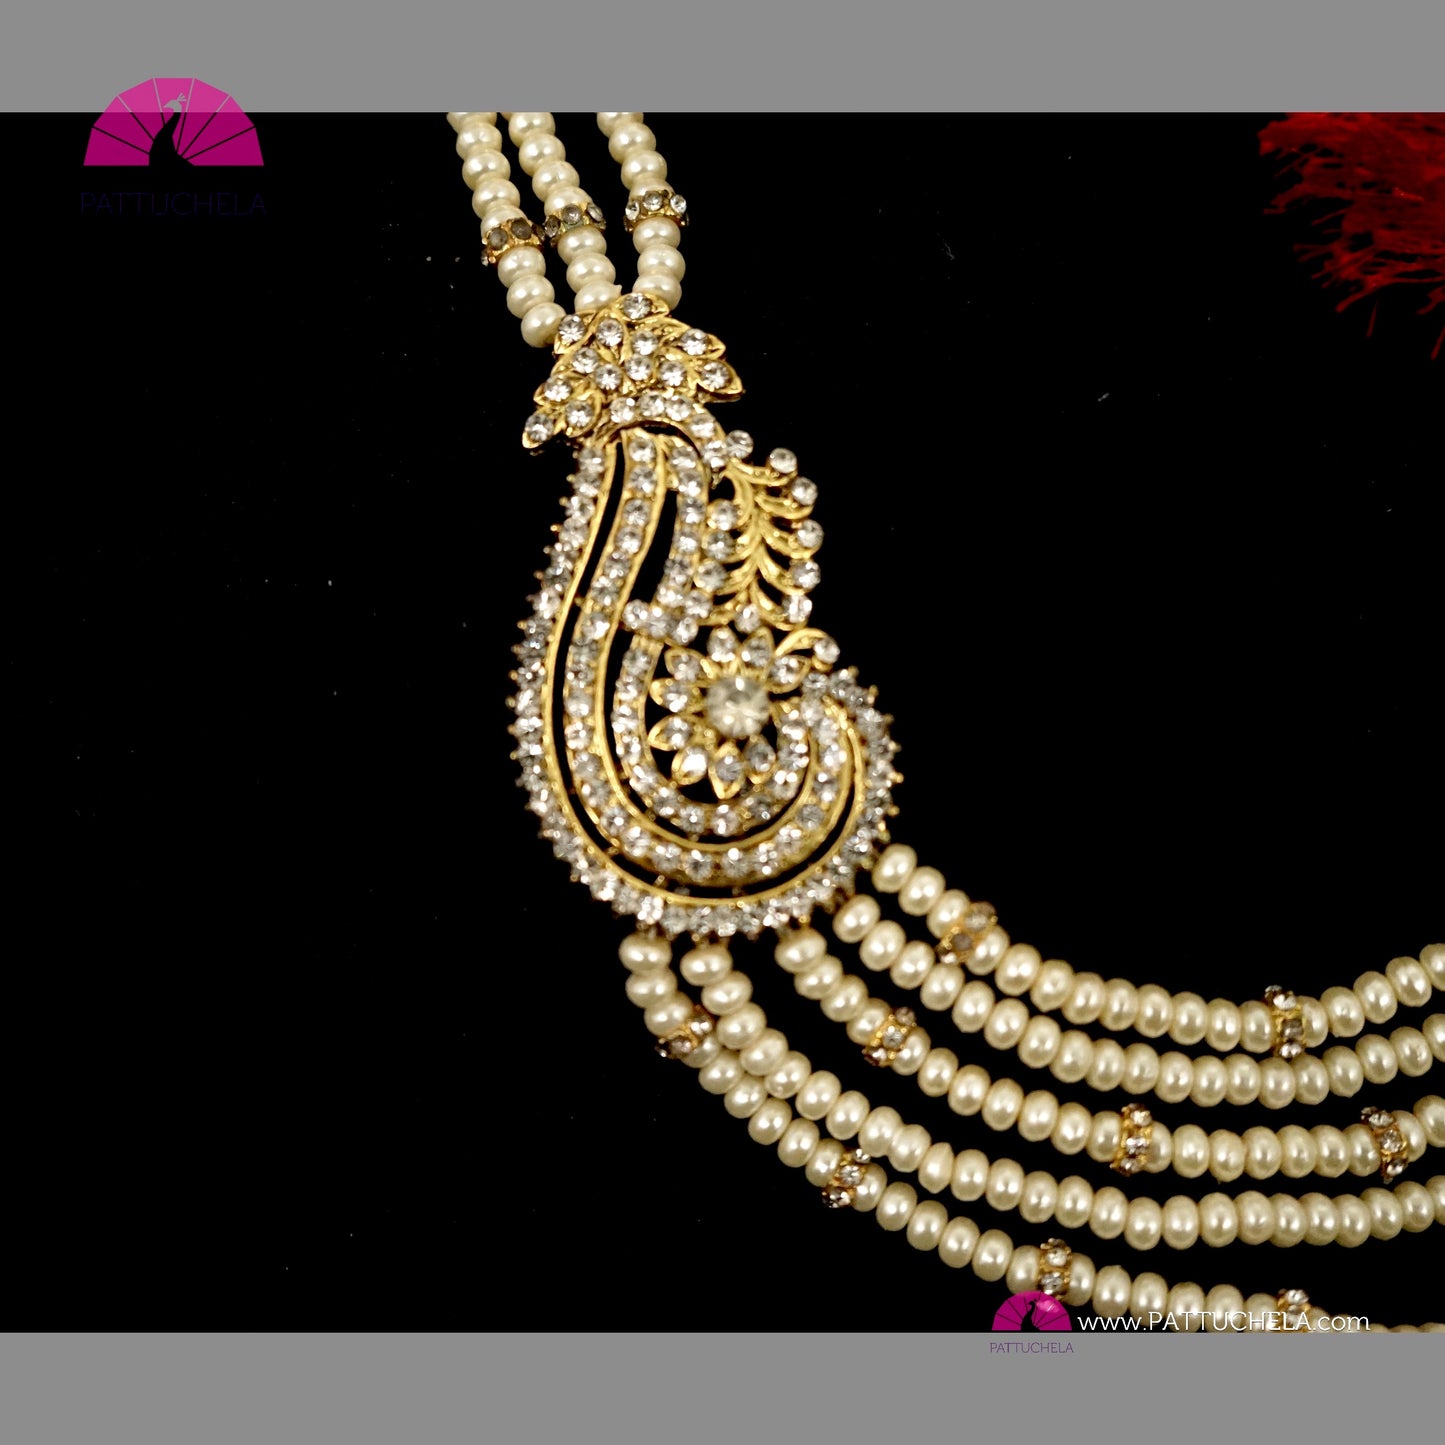 Beautiful multiple layer Pearls Long Necklace / Haar set with earrings | White zircon stones pendant | Party & Festive Wear | Indian Jewelry